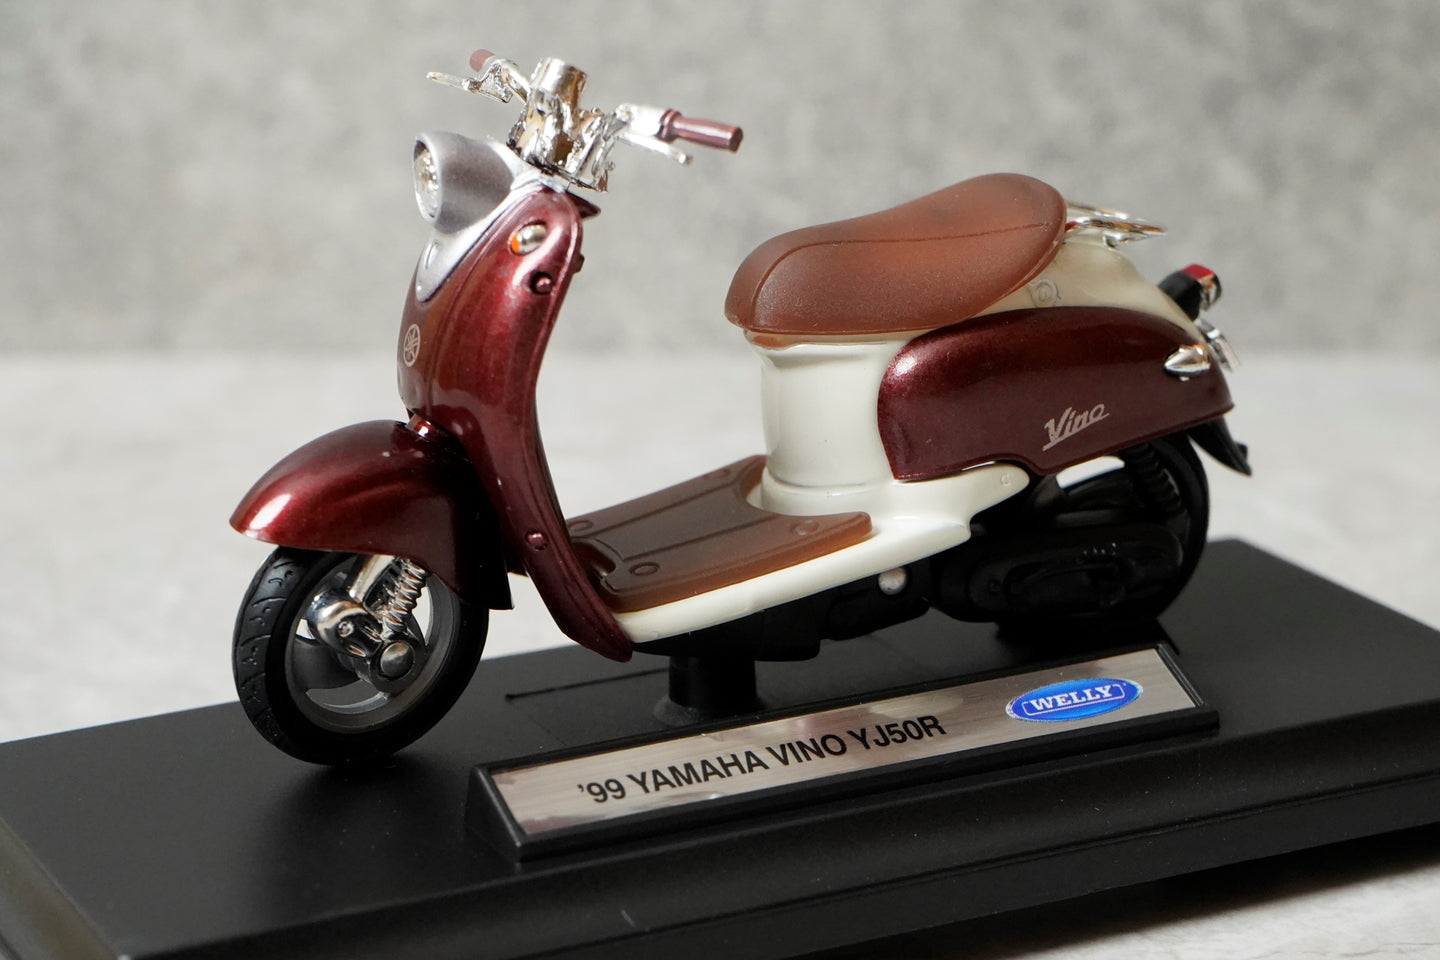 1999 Yamaha Vino YJ50R Diecast Bike 1:18 Motorcycle Model By Welly